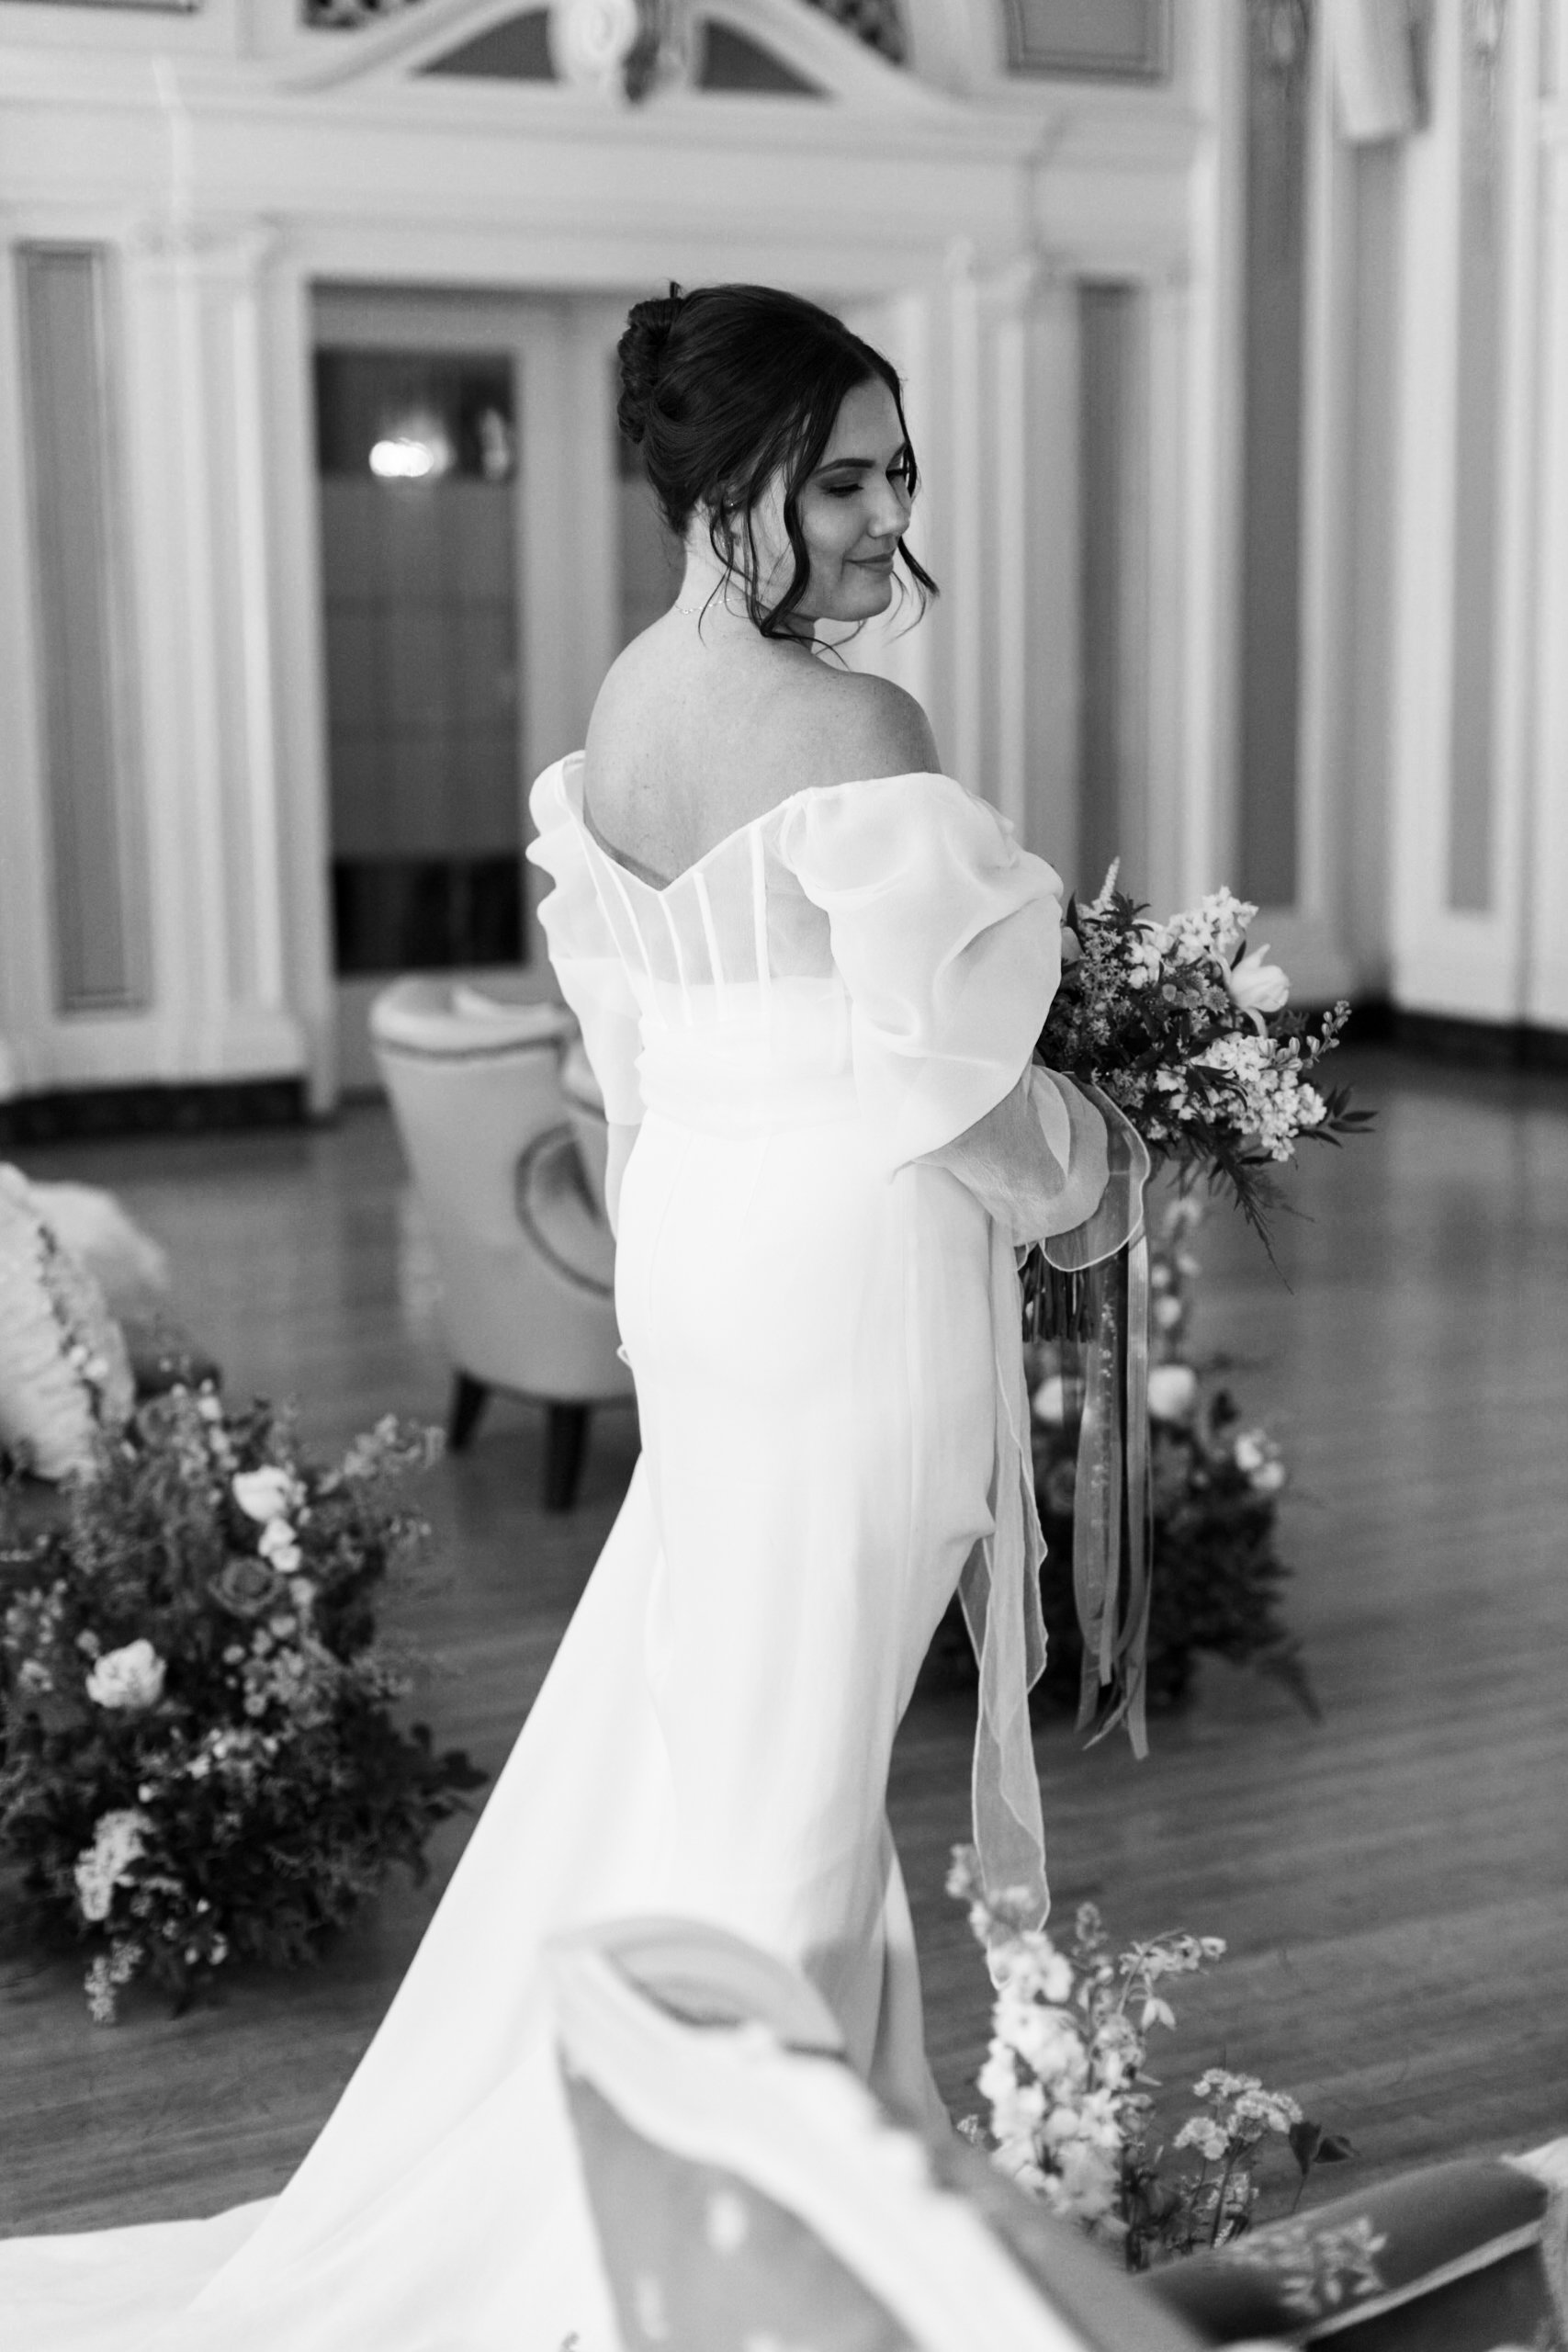 rose-the-label-wedding-dress-alexandra-robyn-photography-7.jpg